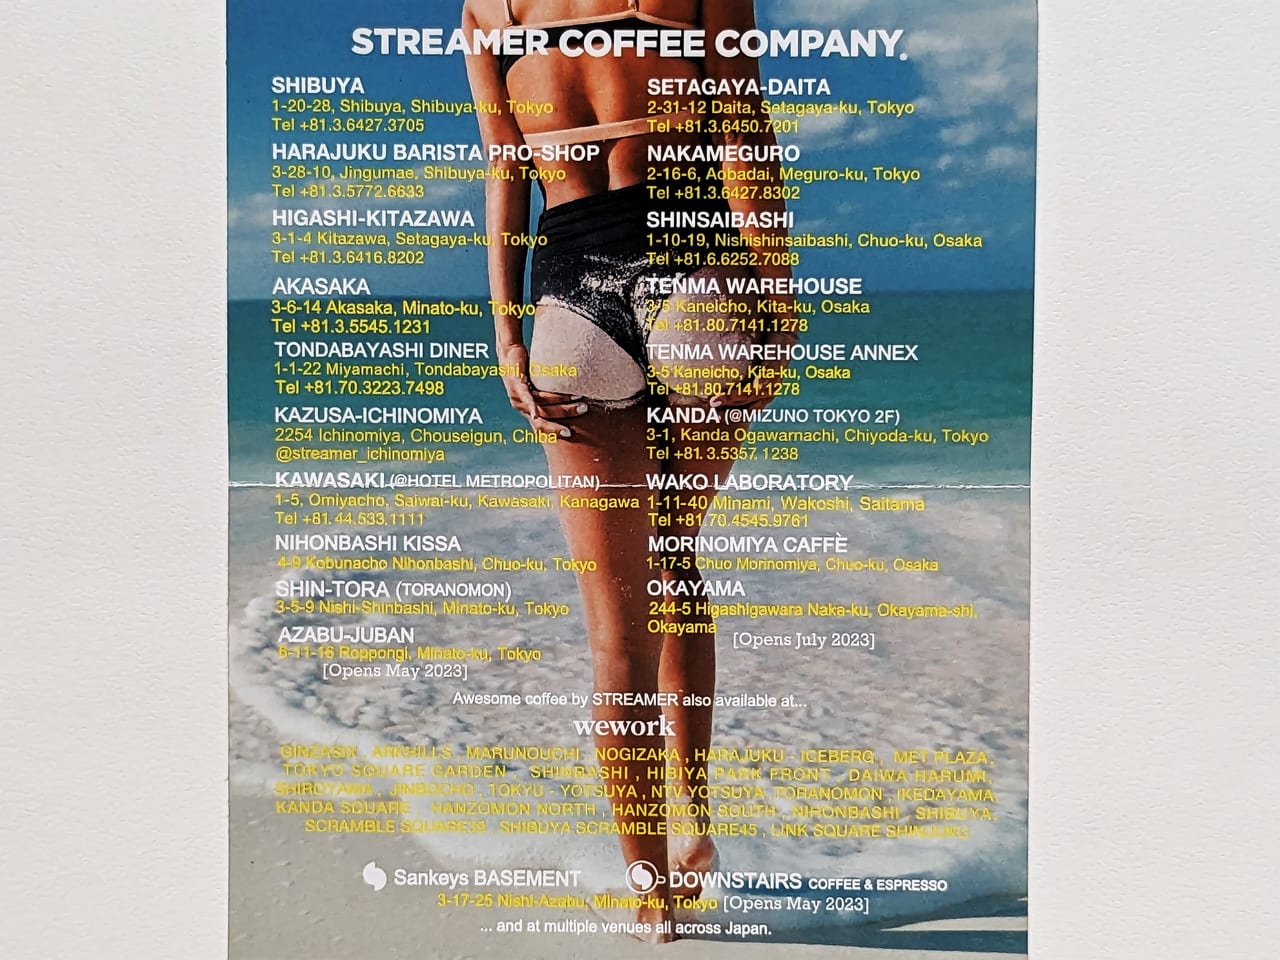 「STREAMER COFFEE COMPANY」のショップカード